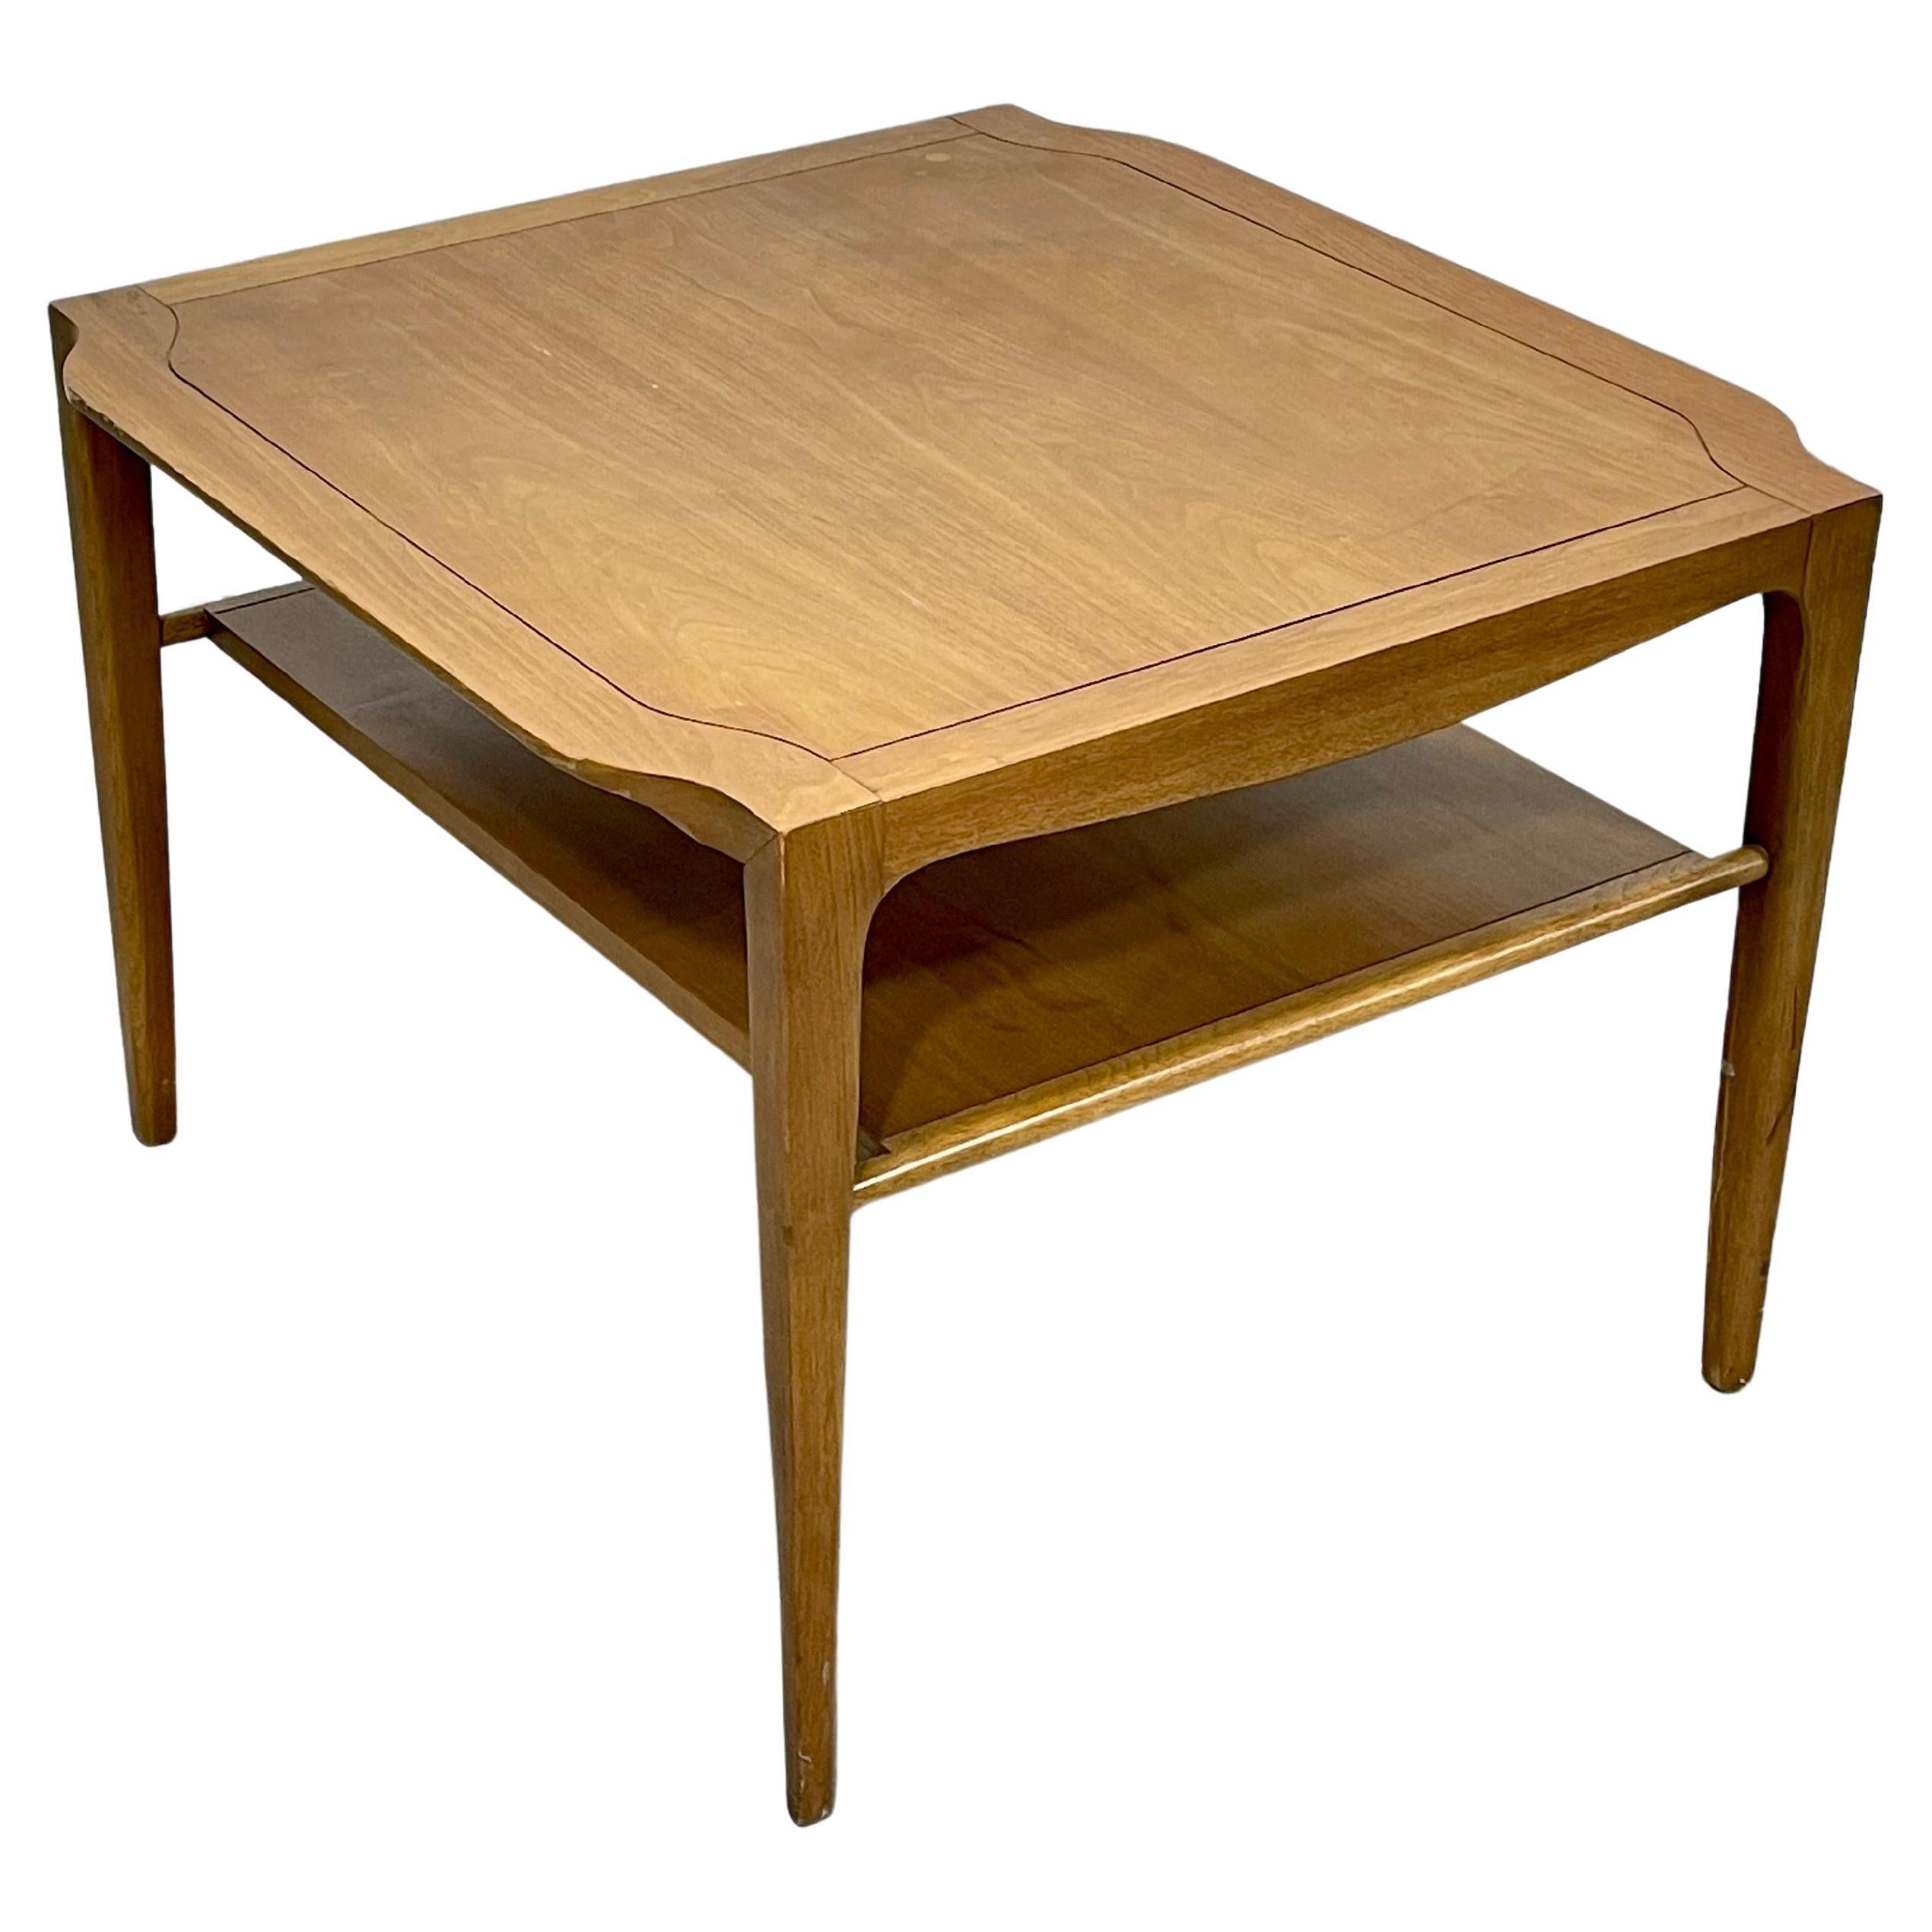 Mid-Century Modern Side Table / End Table by John Van Koert for Drexel Profile